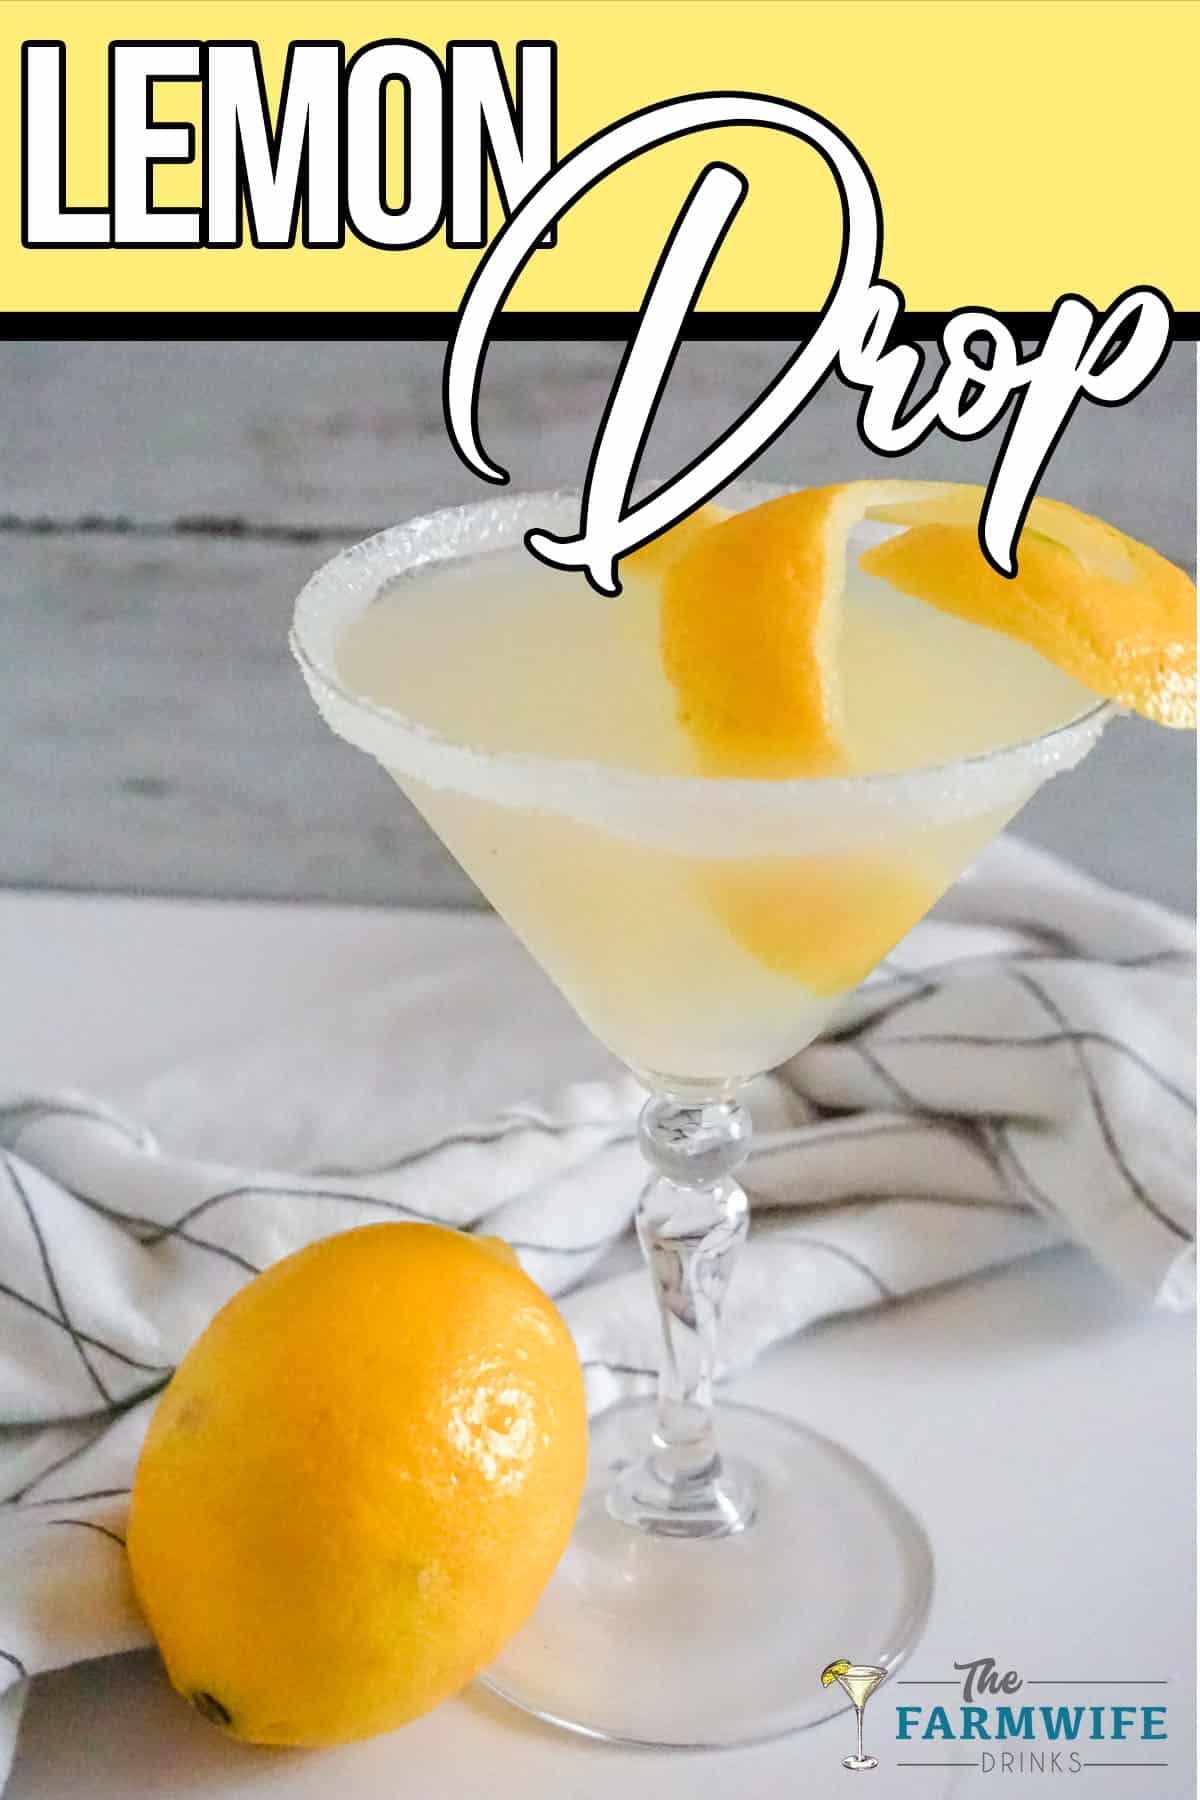 lemon drop cocktail with text which reads lemon drop